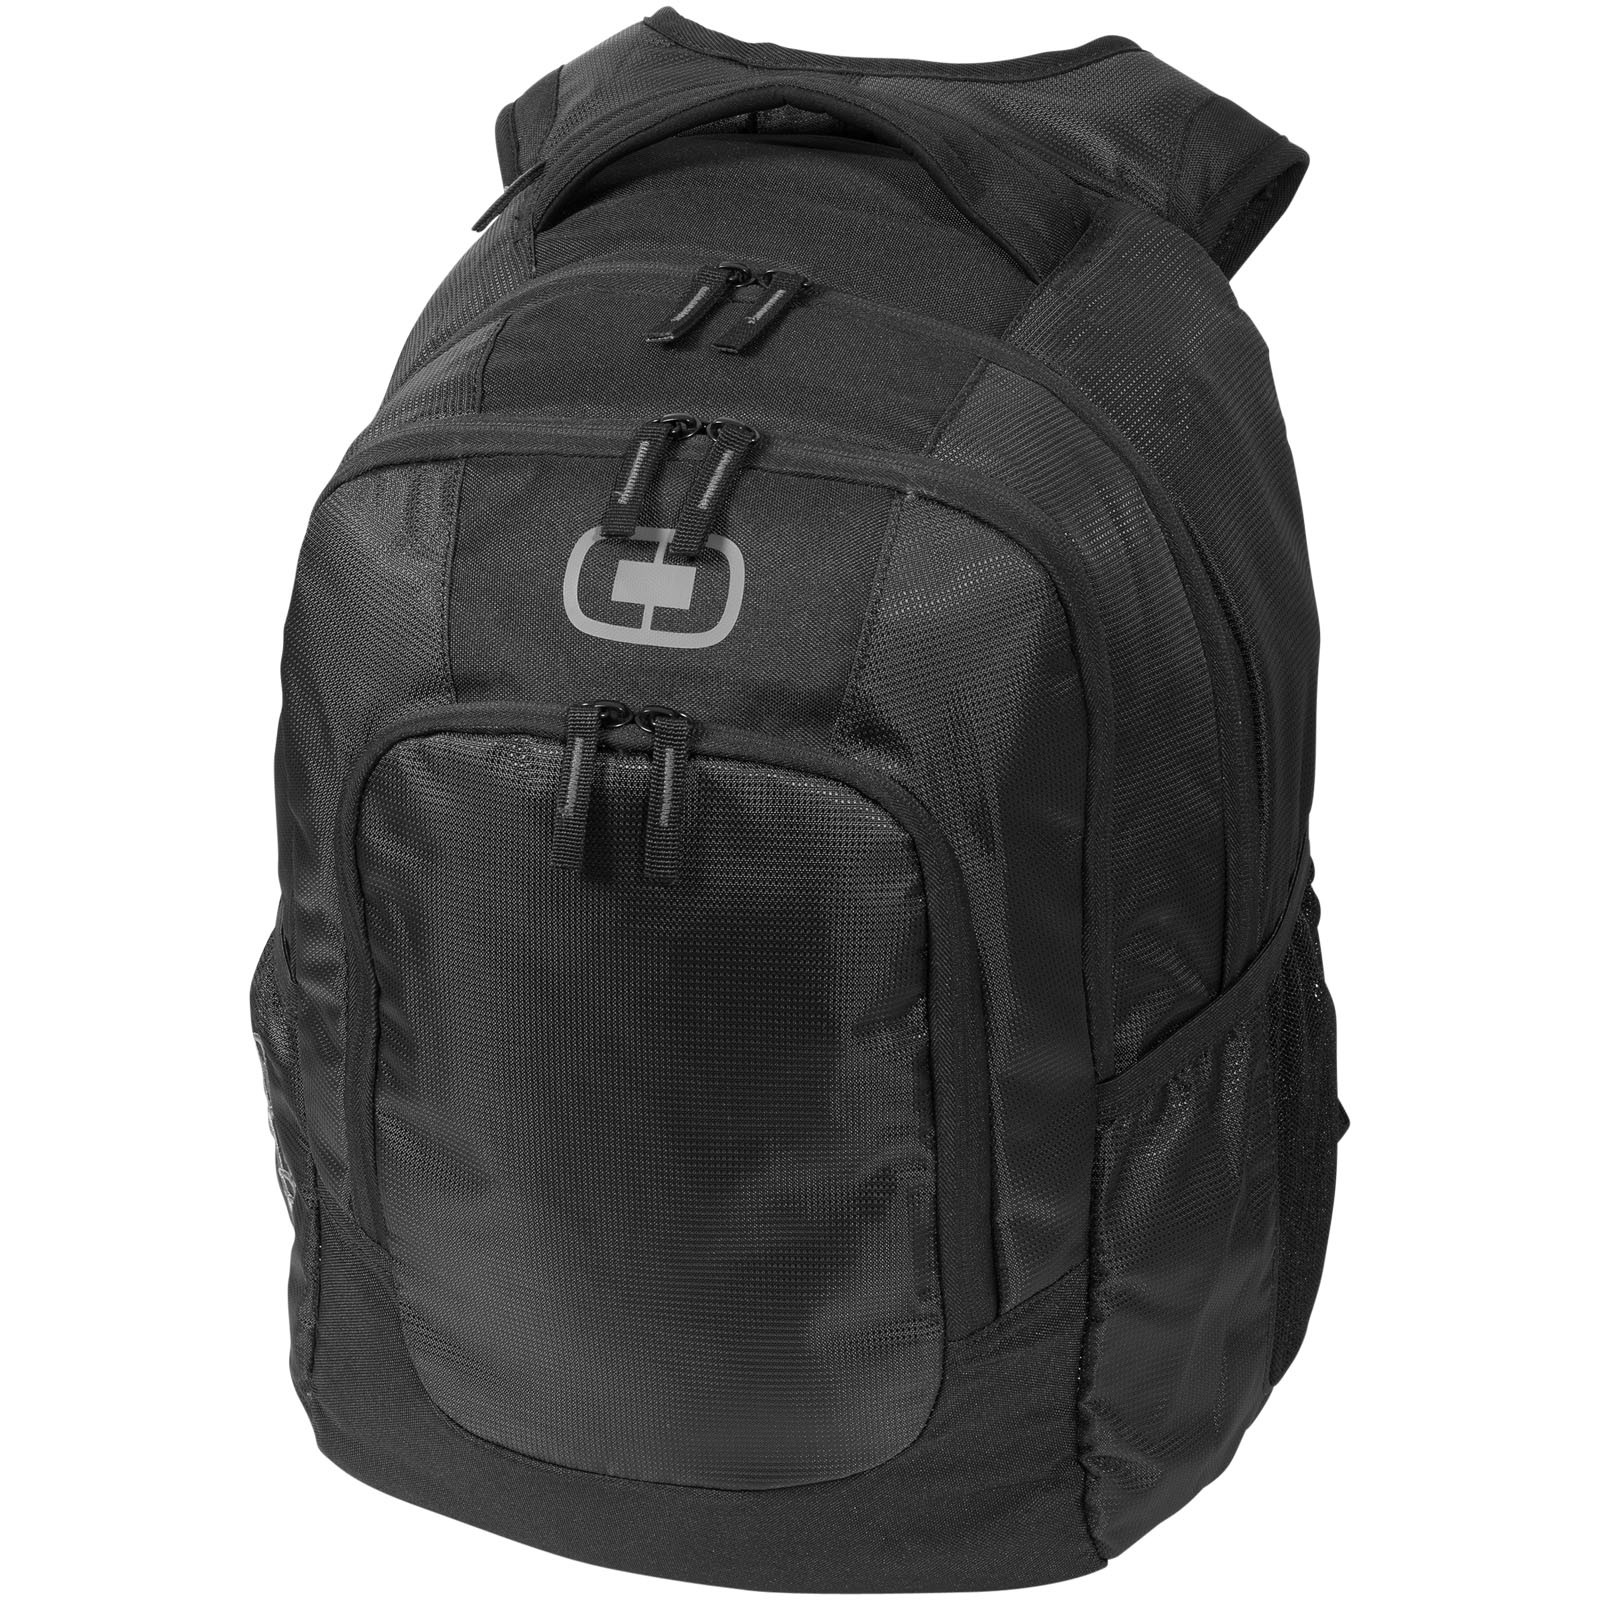 Logan 15.6" laptop backpack